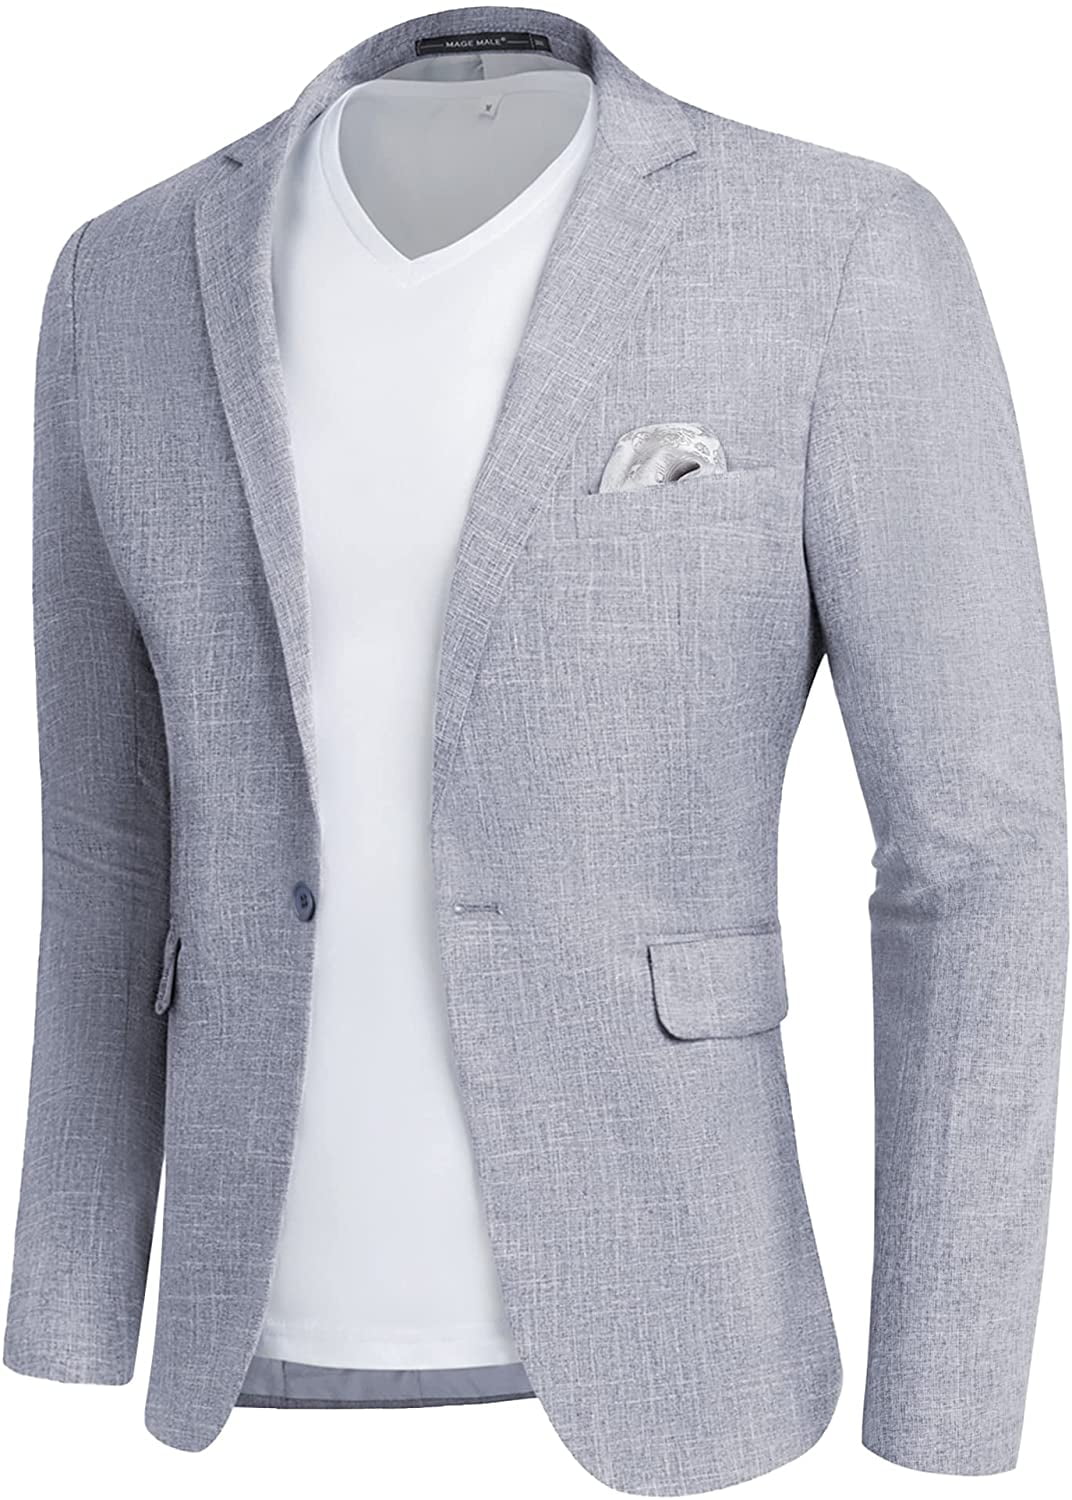 MAGE MALE Men's Slim Fit Blazer Jackets Casual Sport Coats - Walmart.com